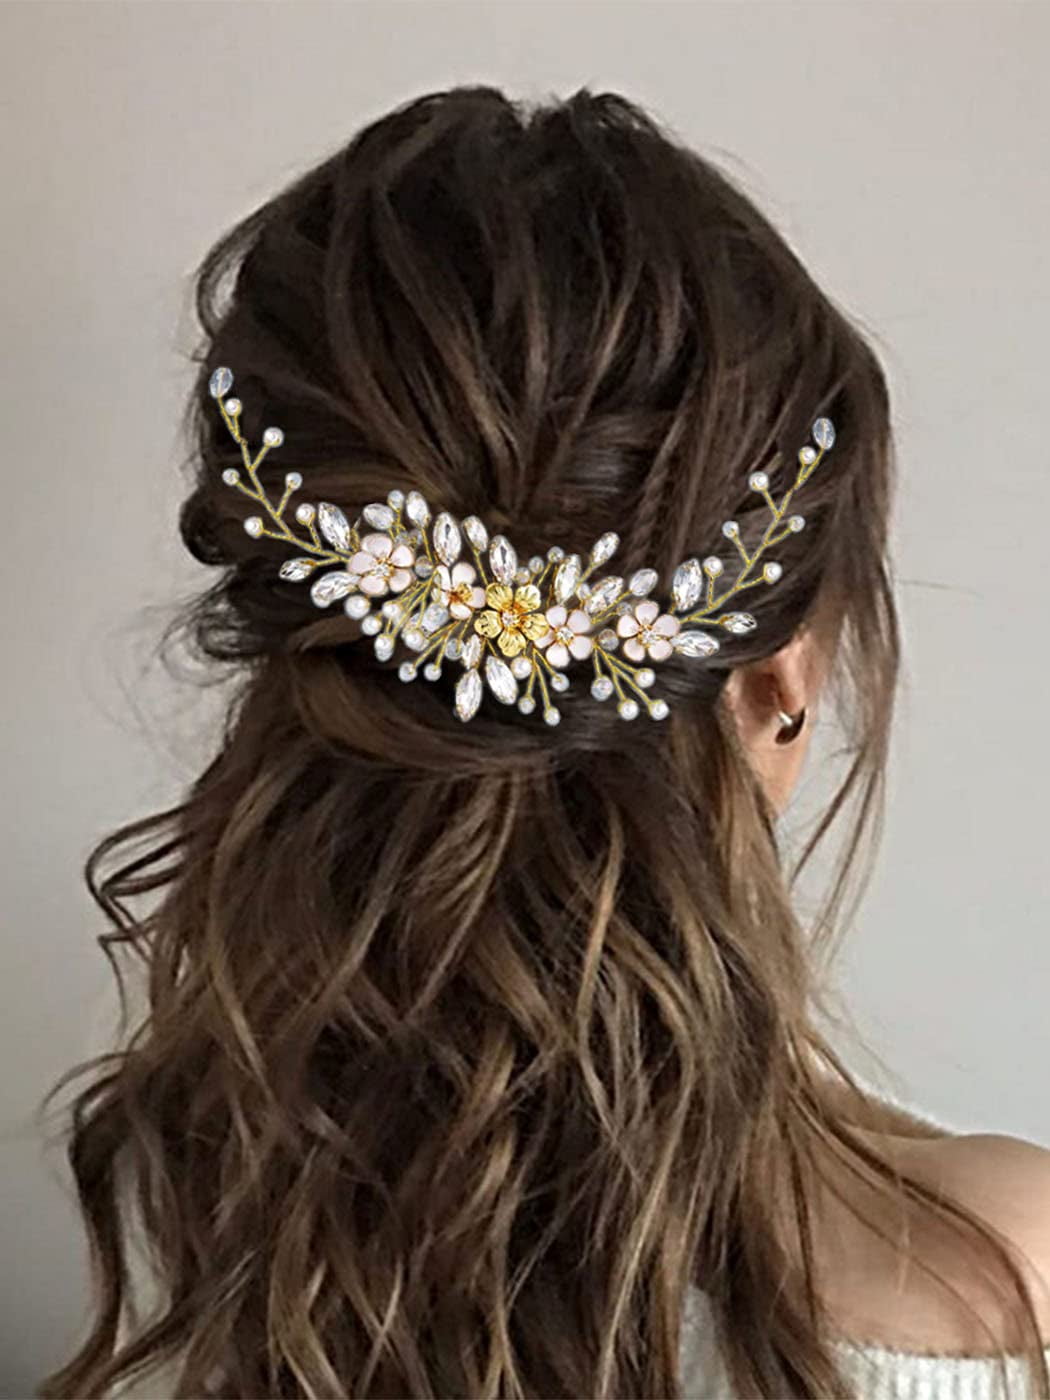 Charm Bride Double Layer Crystal Beads Wedding Headpiece Hair Band Hair Jewelry 